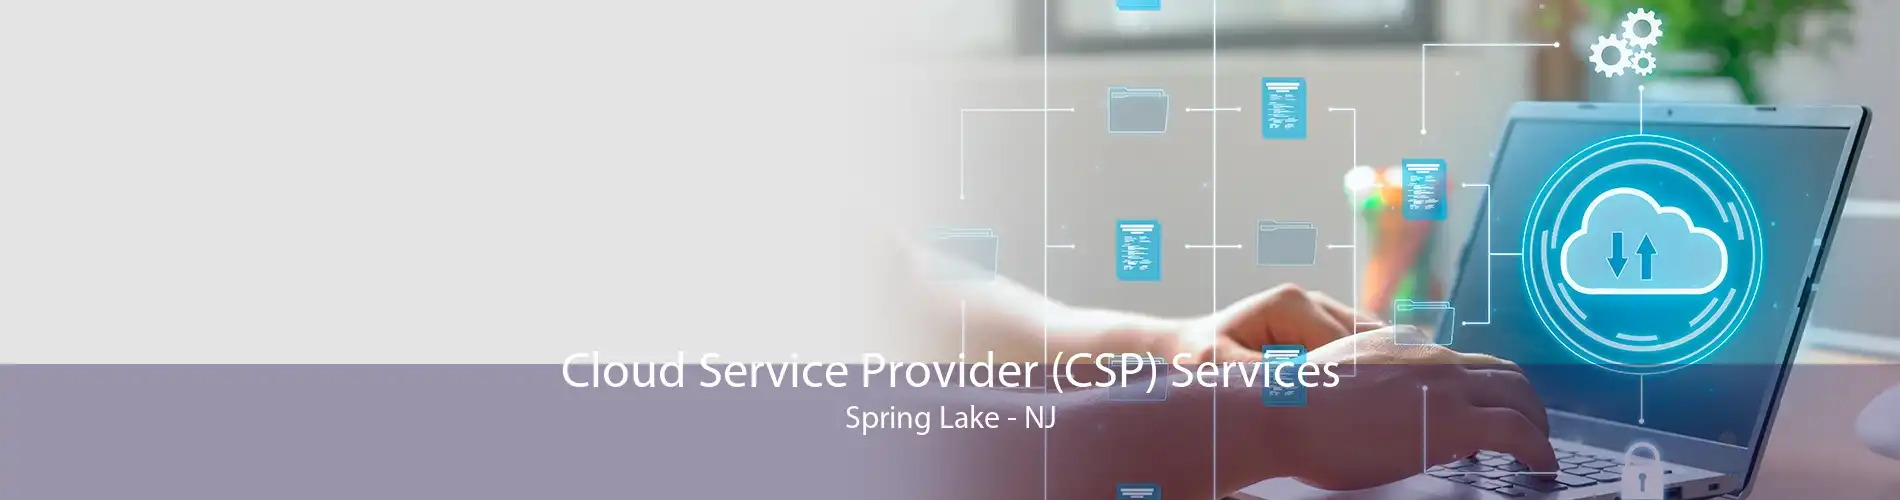 Cloud Service Provider (CSP) Services Spring Lake - NJ